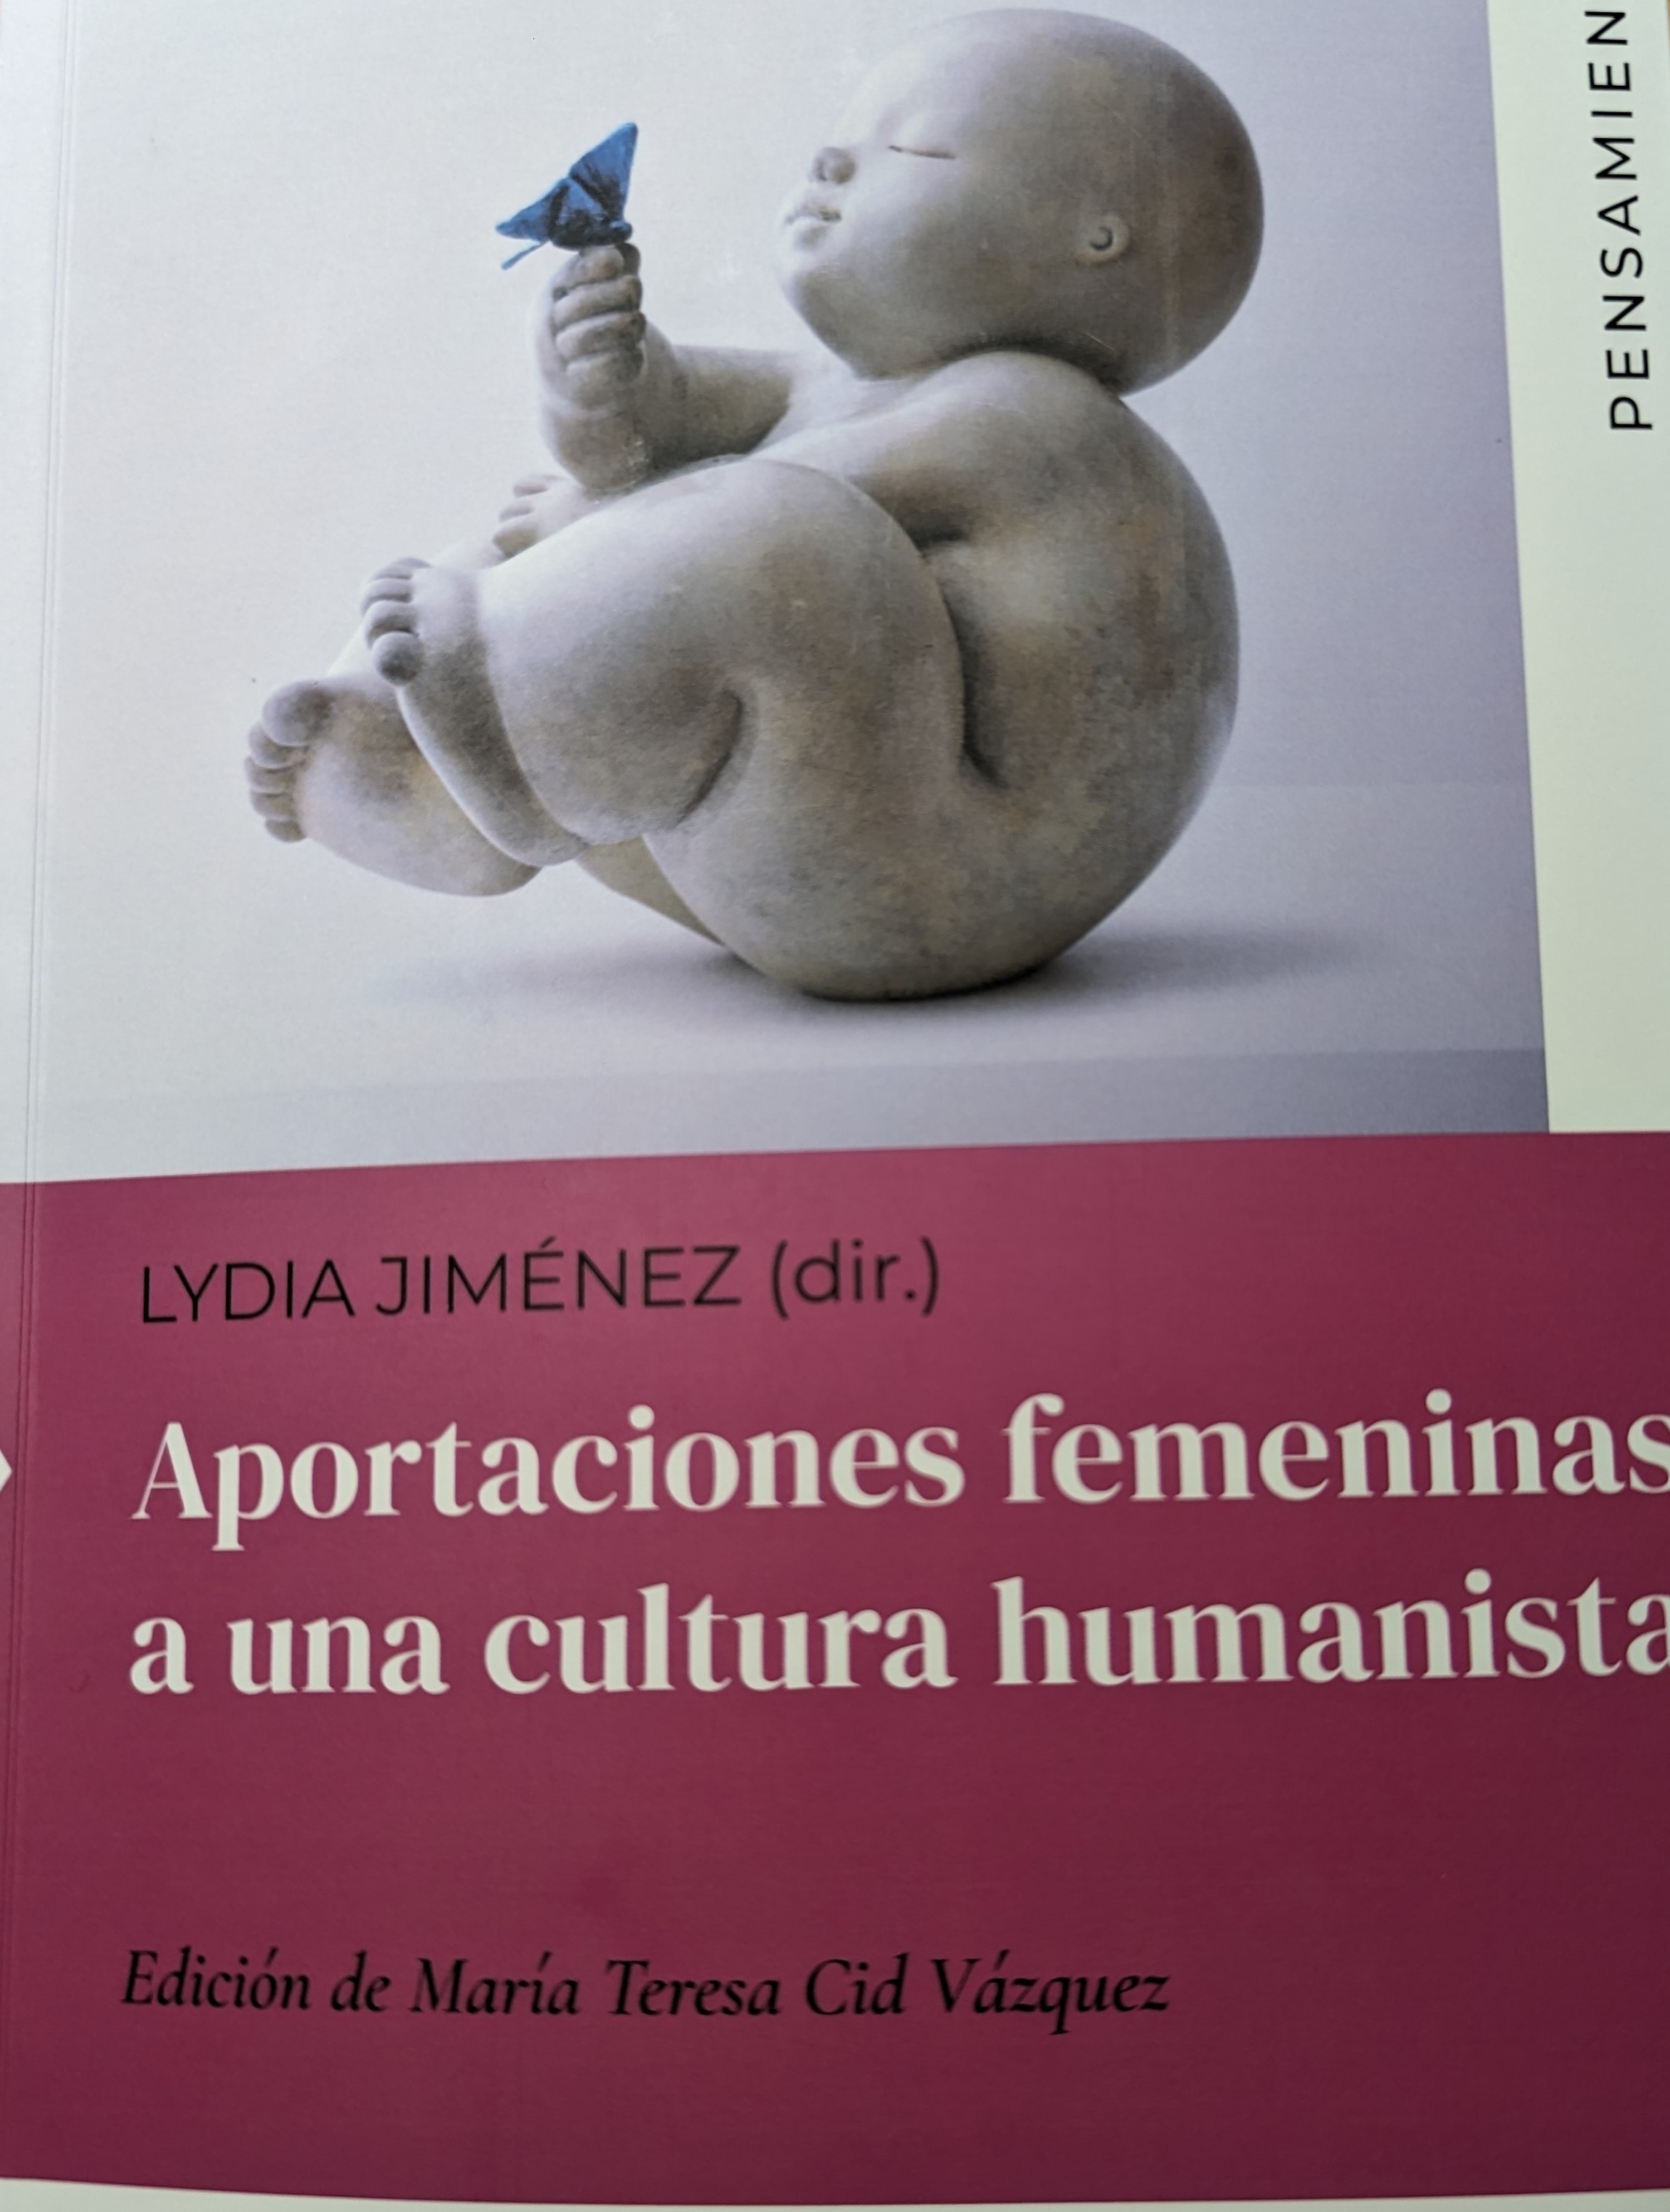 Imagen de portada del libro Aportaciones femeninas a una cultura humanista